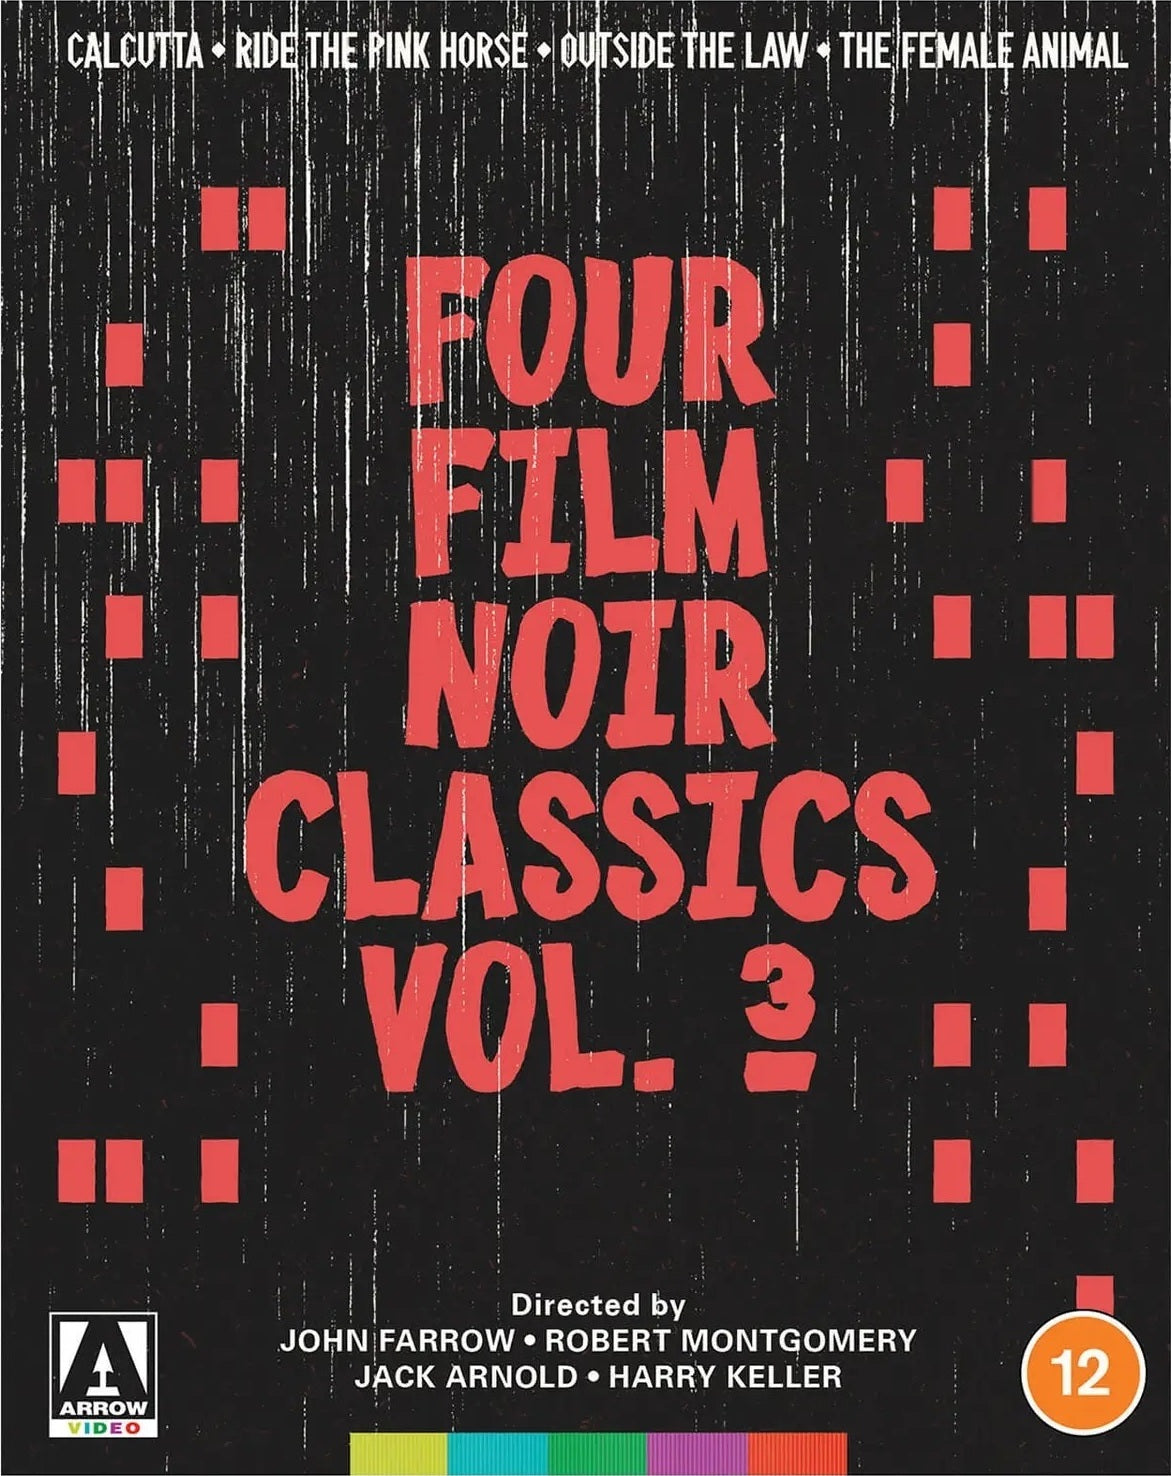 FOUR FILM NOIR CLASSICS VOLUME 3 (REGION B IMPORT - LIMITED EDITION) BLU-RAY